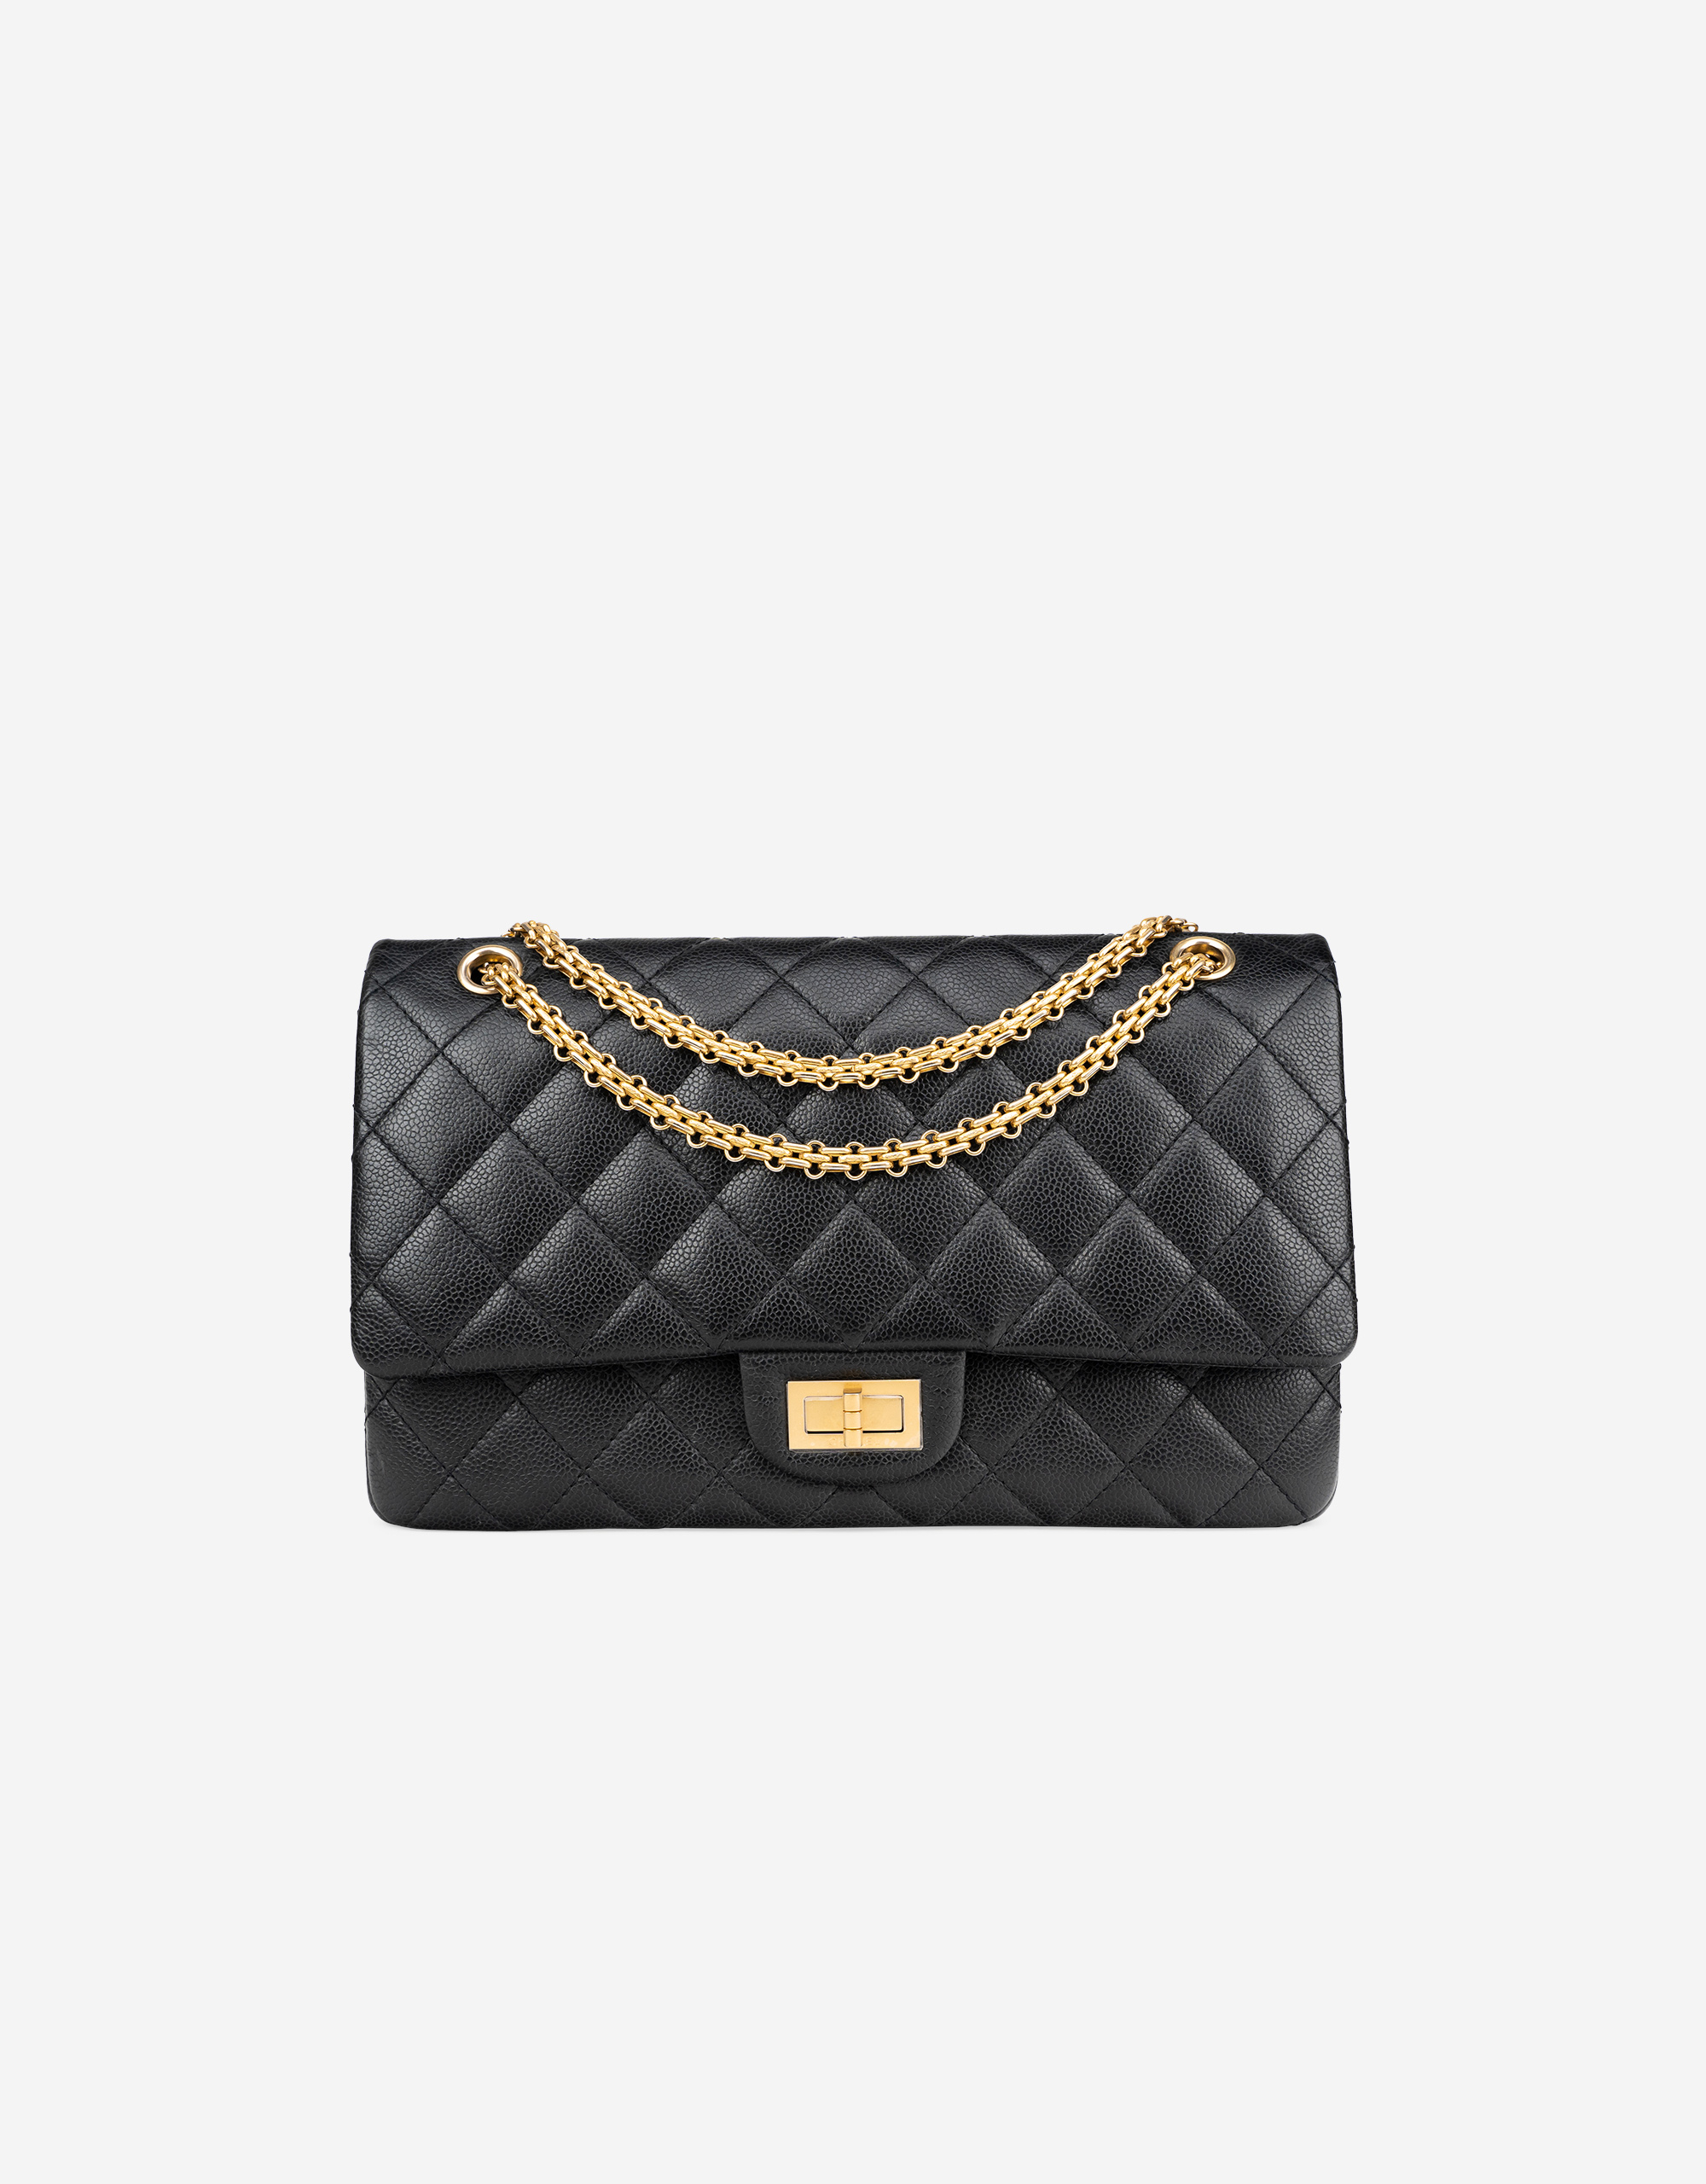 Chanel 2.55 227 Caviar Black | SACLÀB